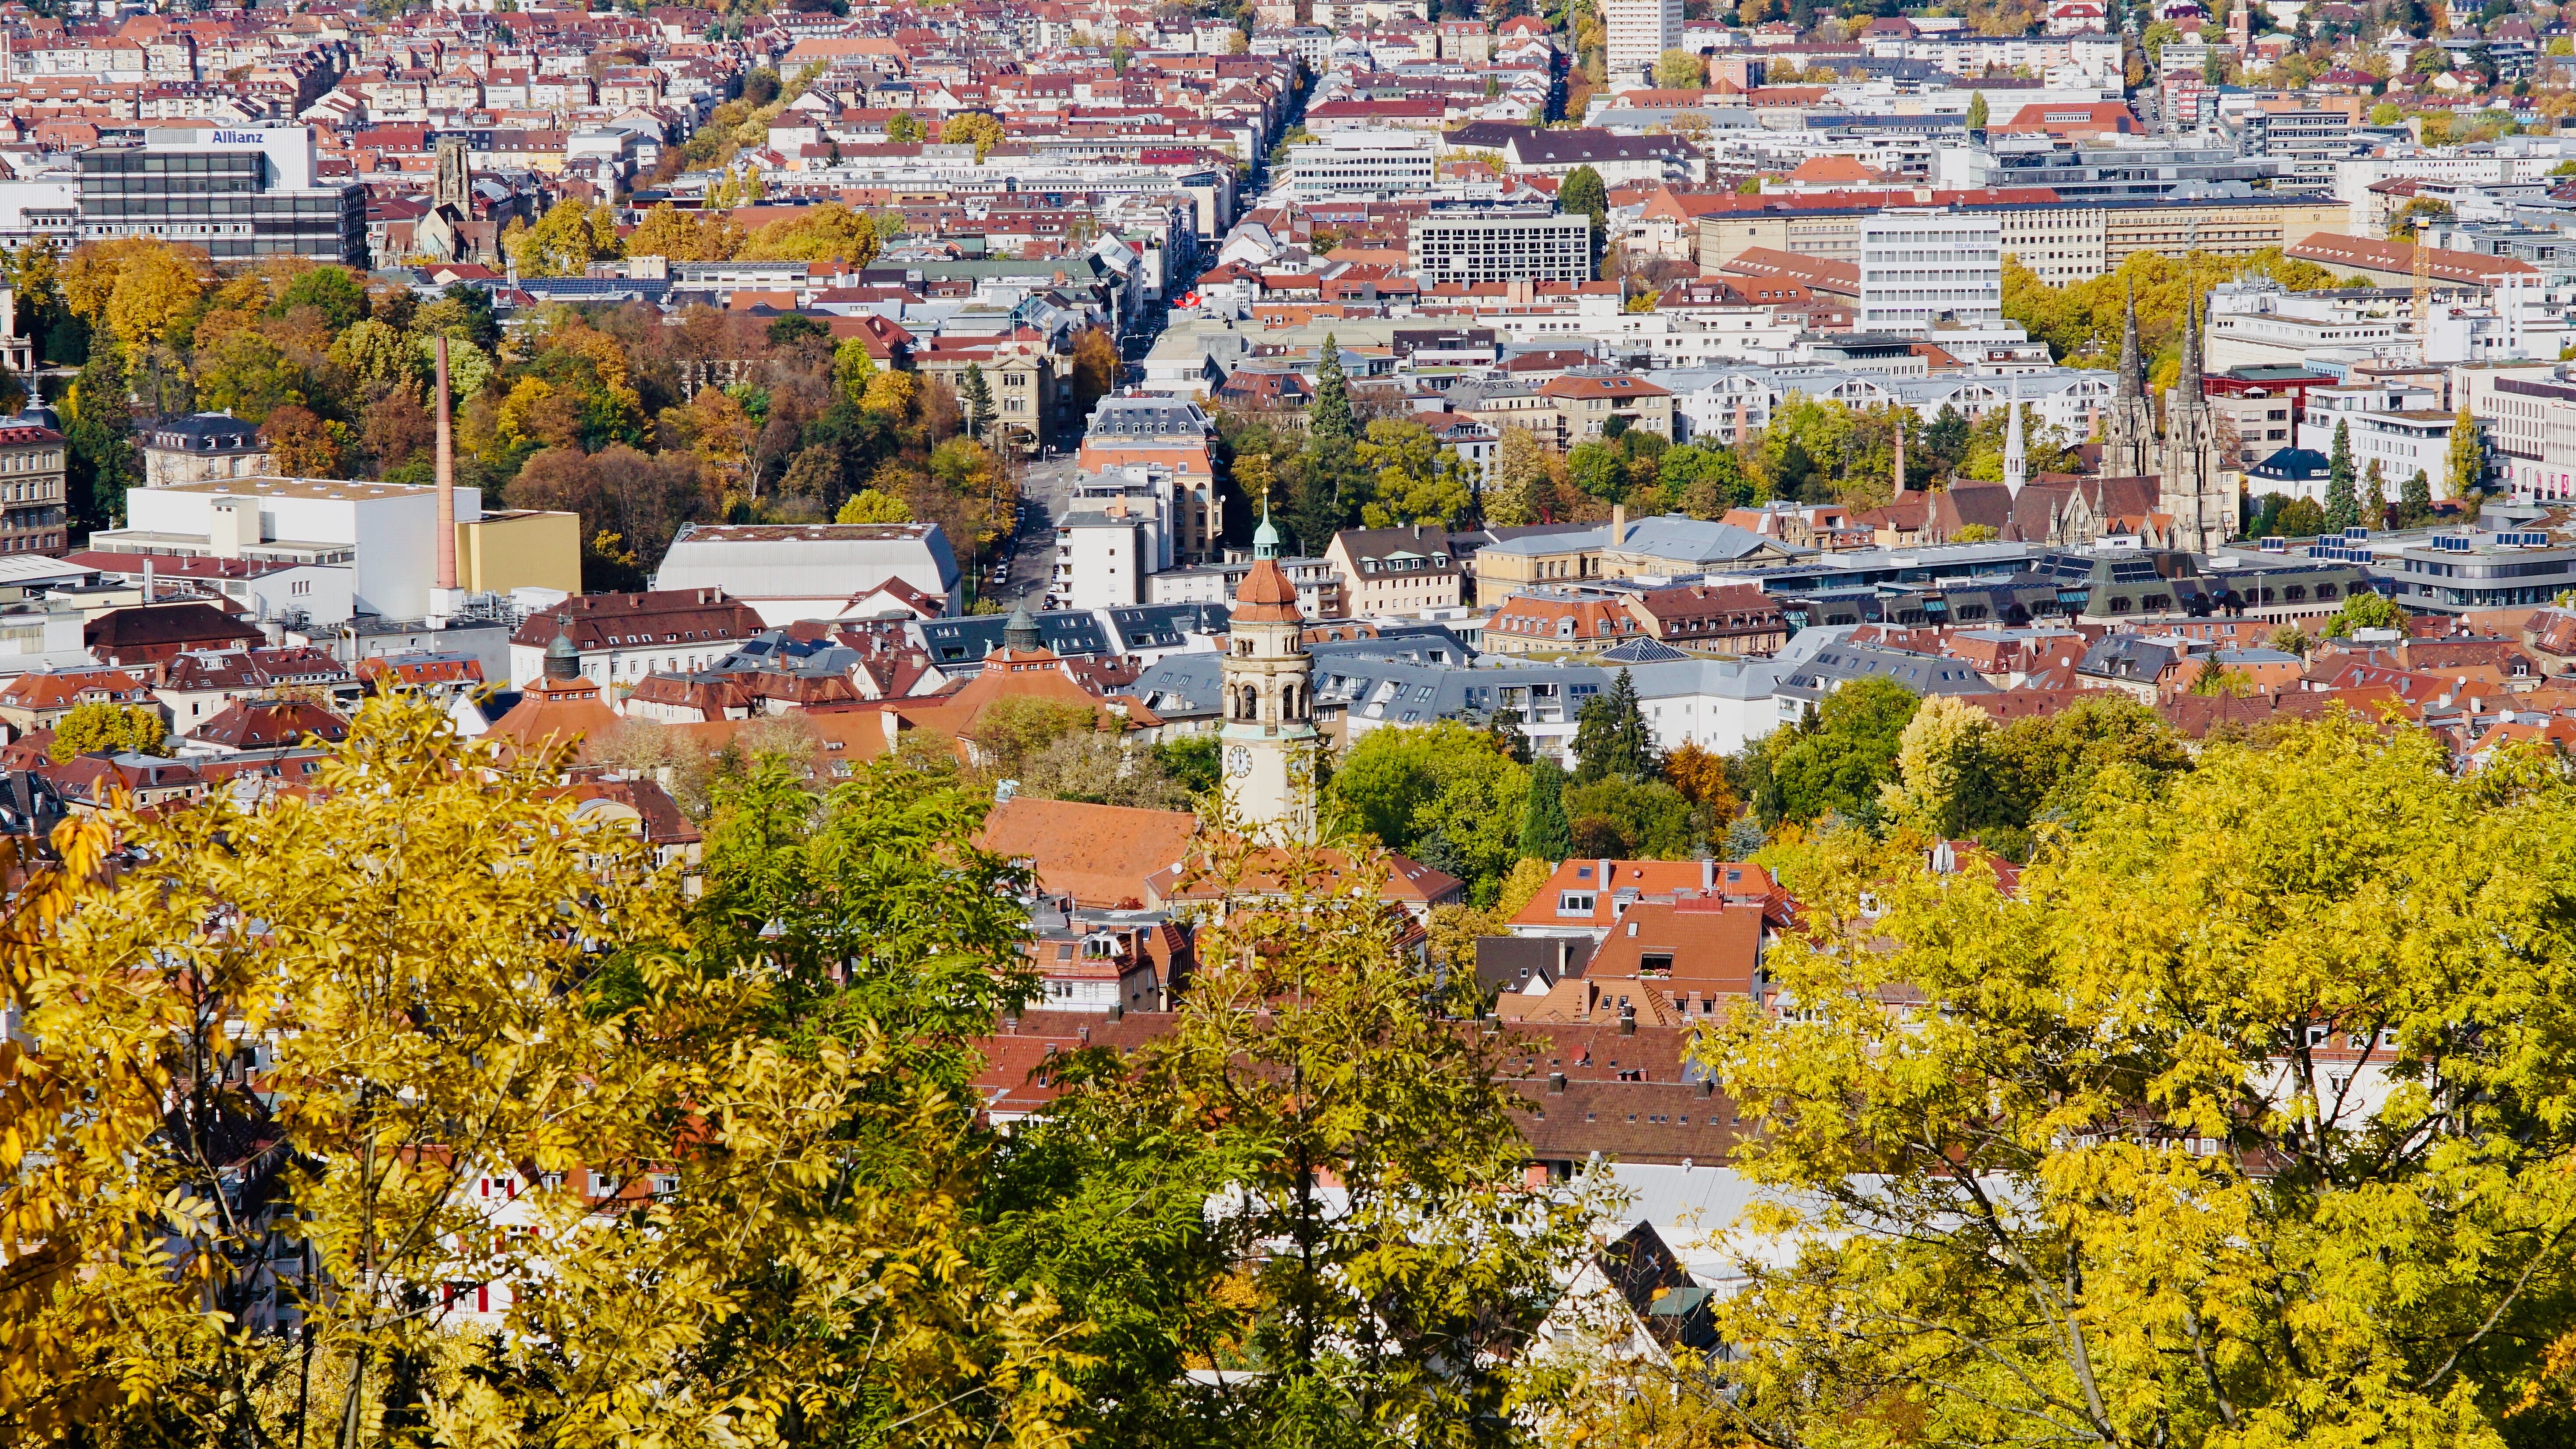 Image of Stuttgart from above